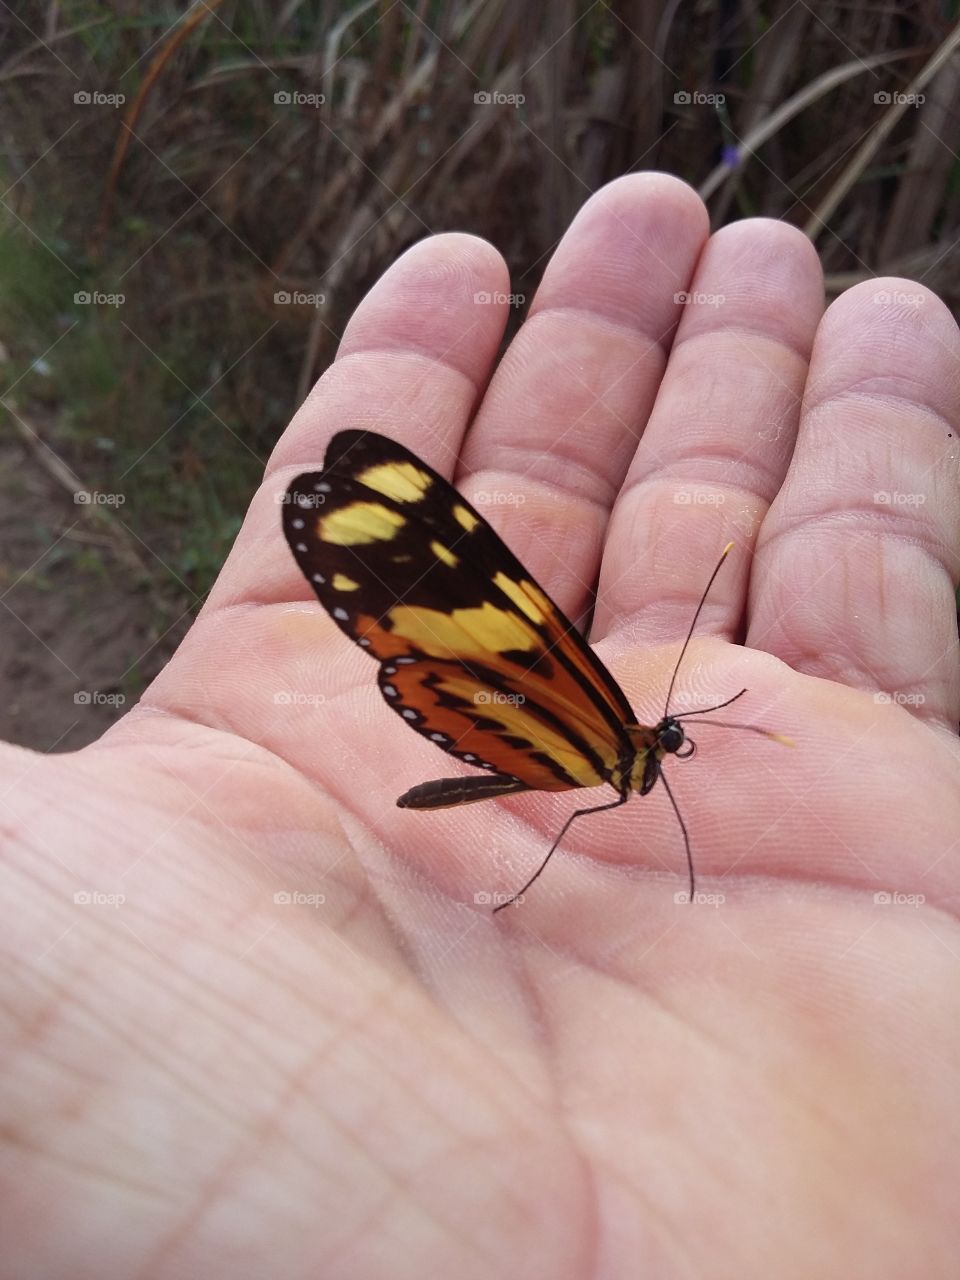 Butterfly very common in northeastern Brazil